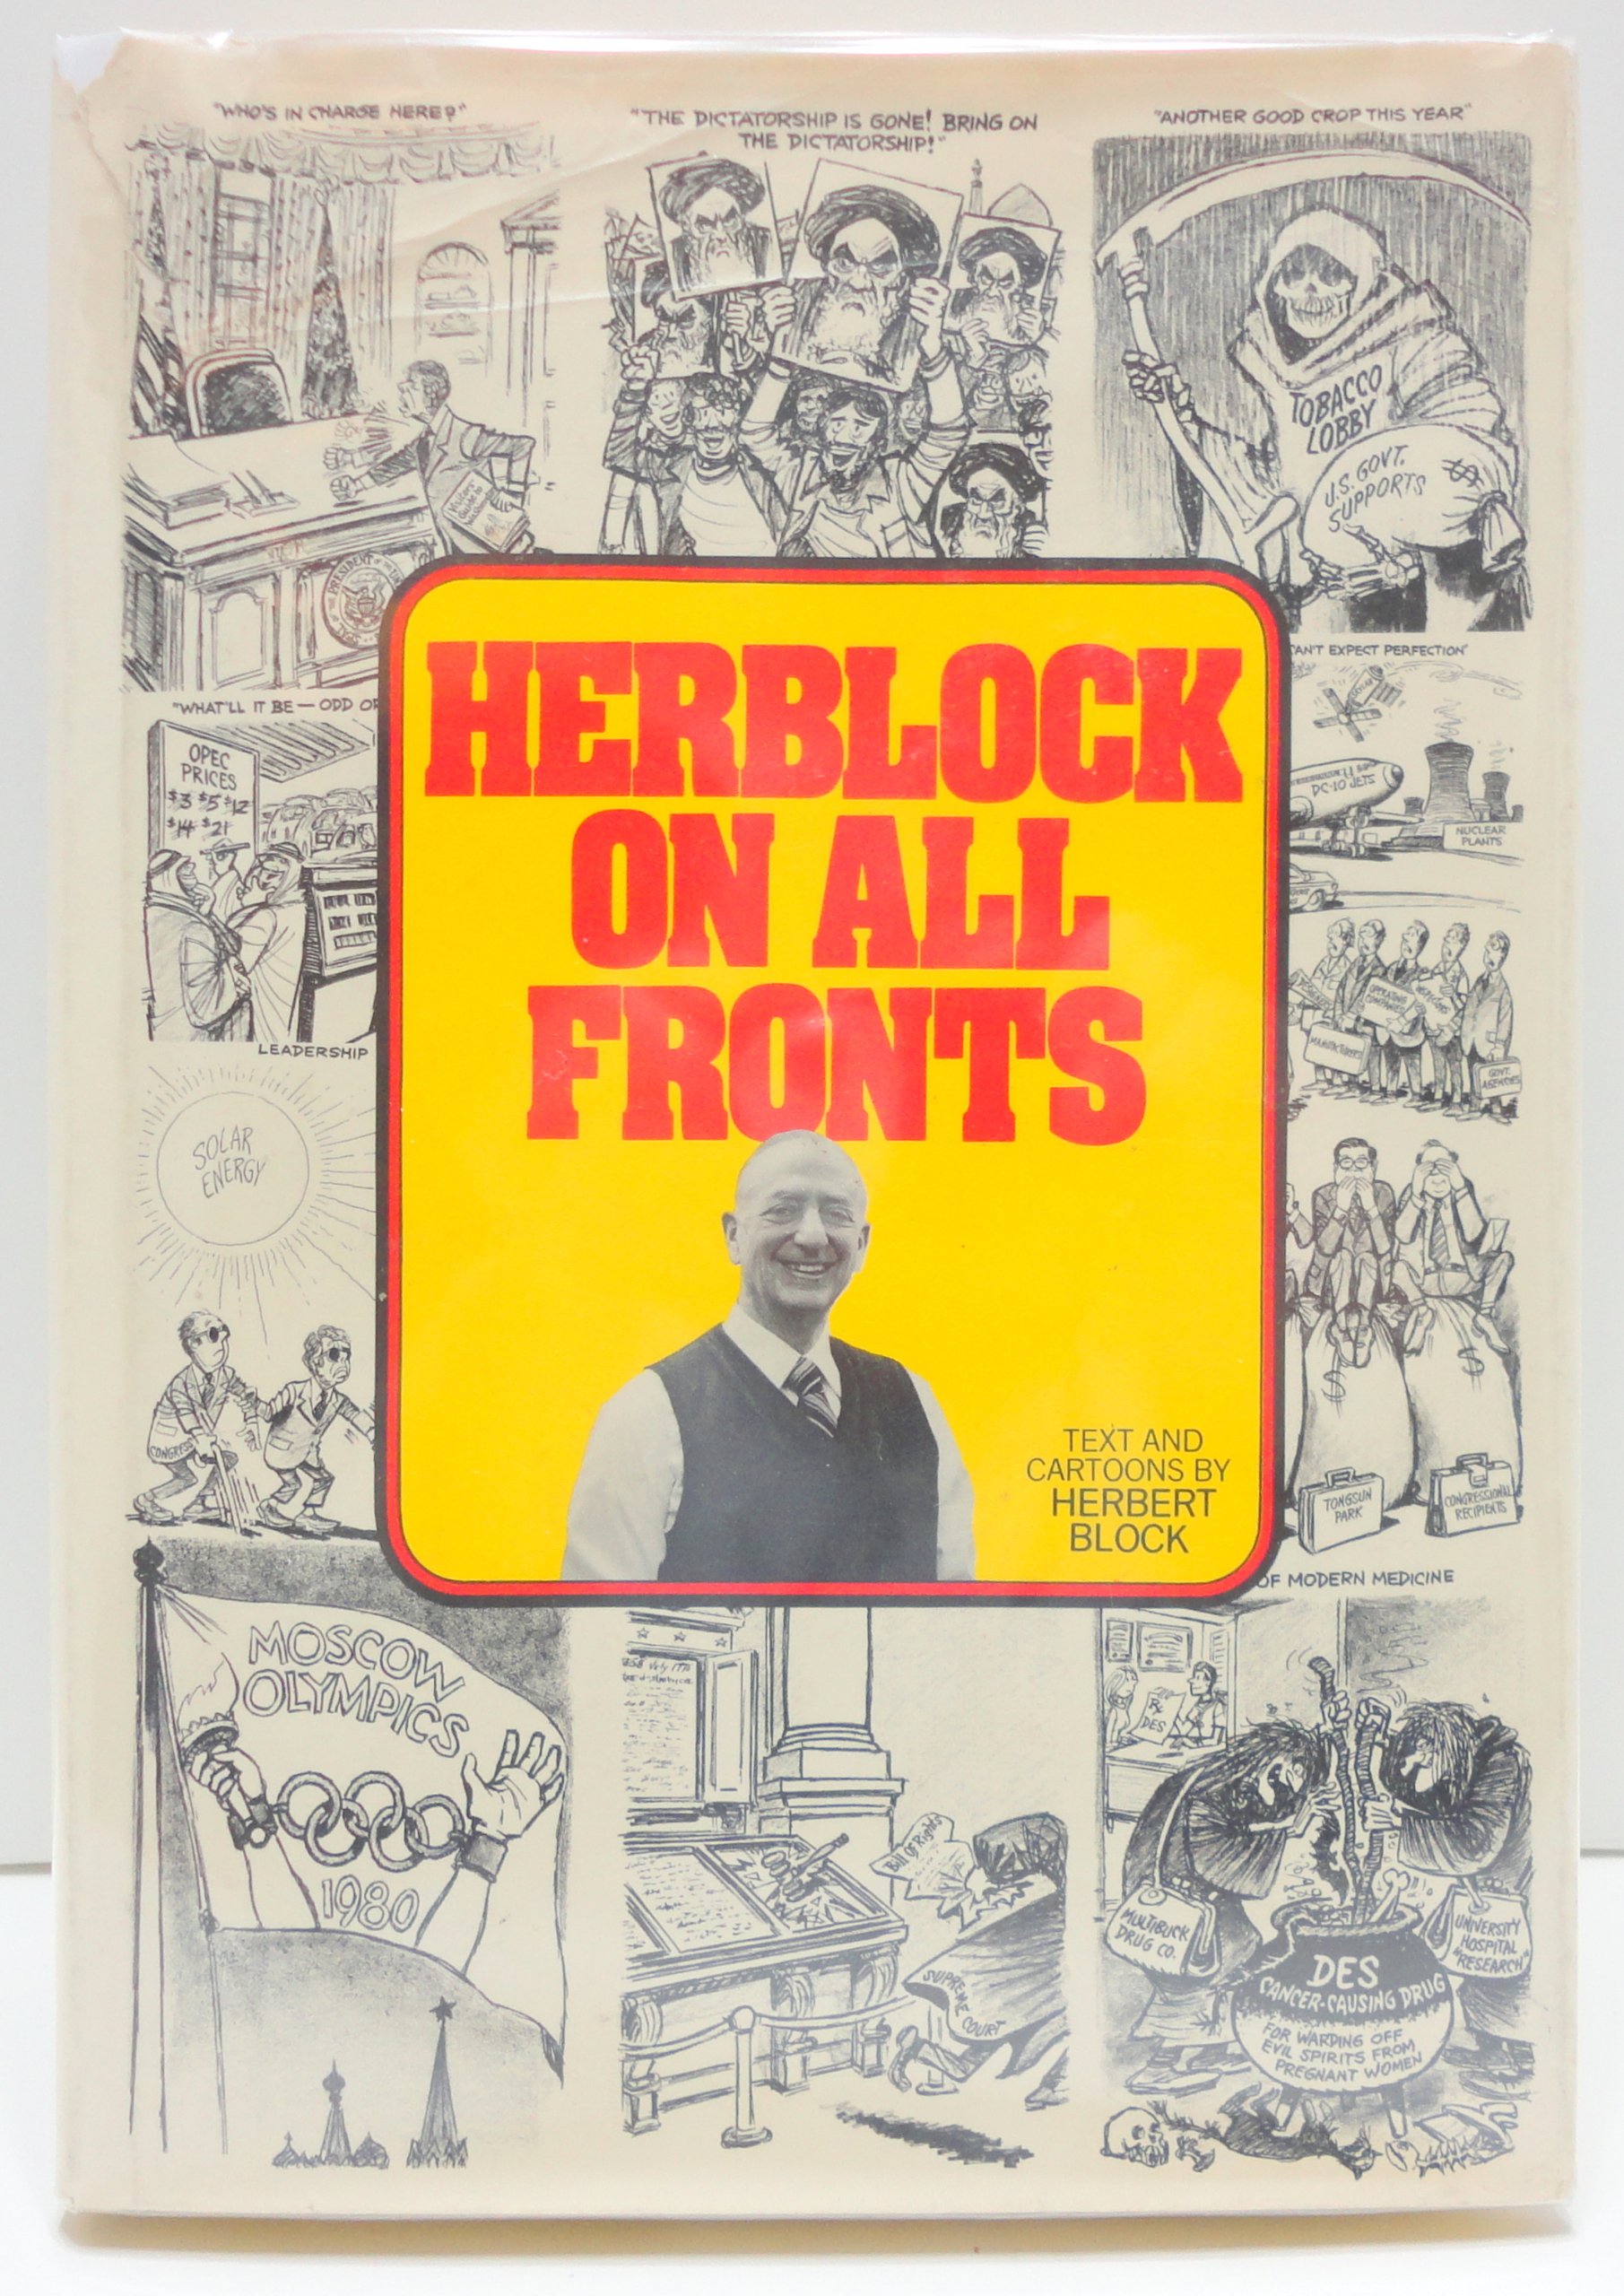 Herblock on all fronts book written by Herbert Block